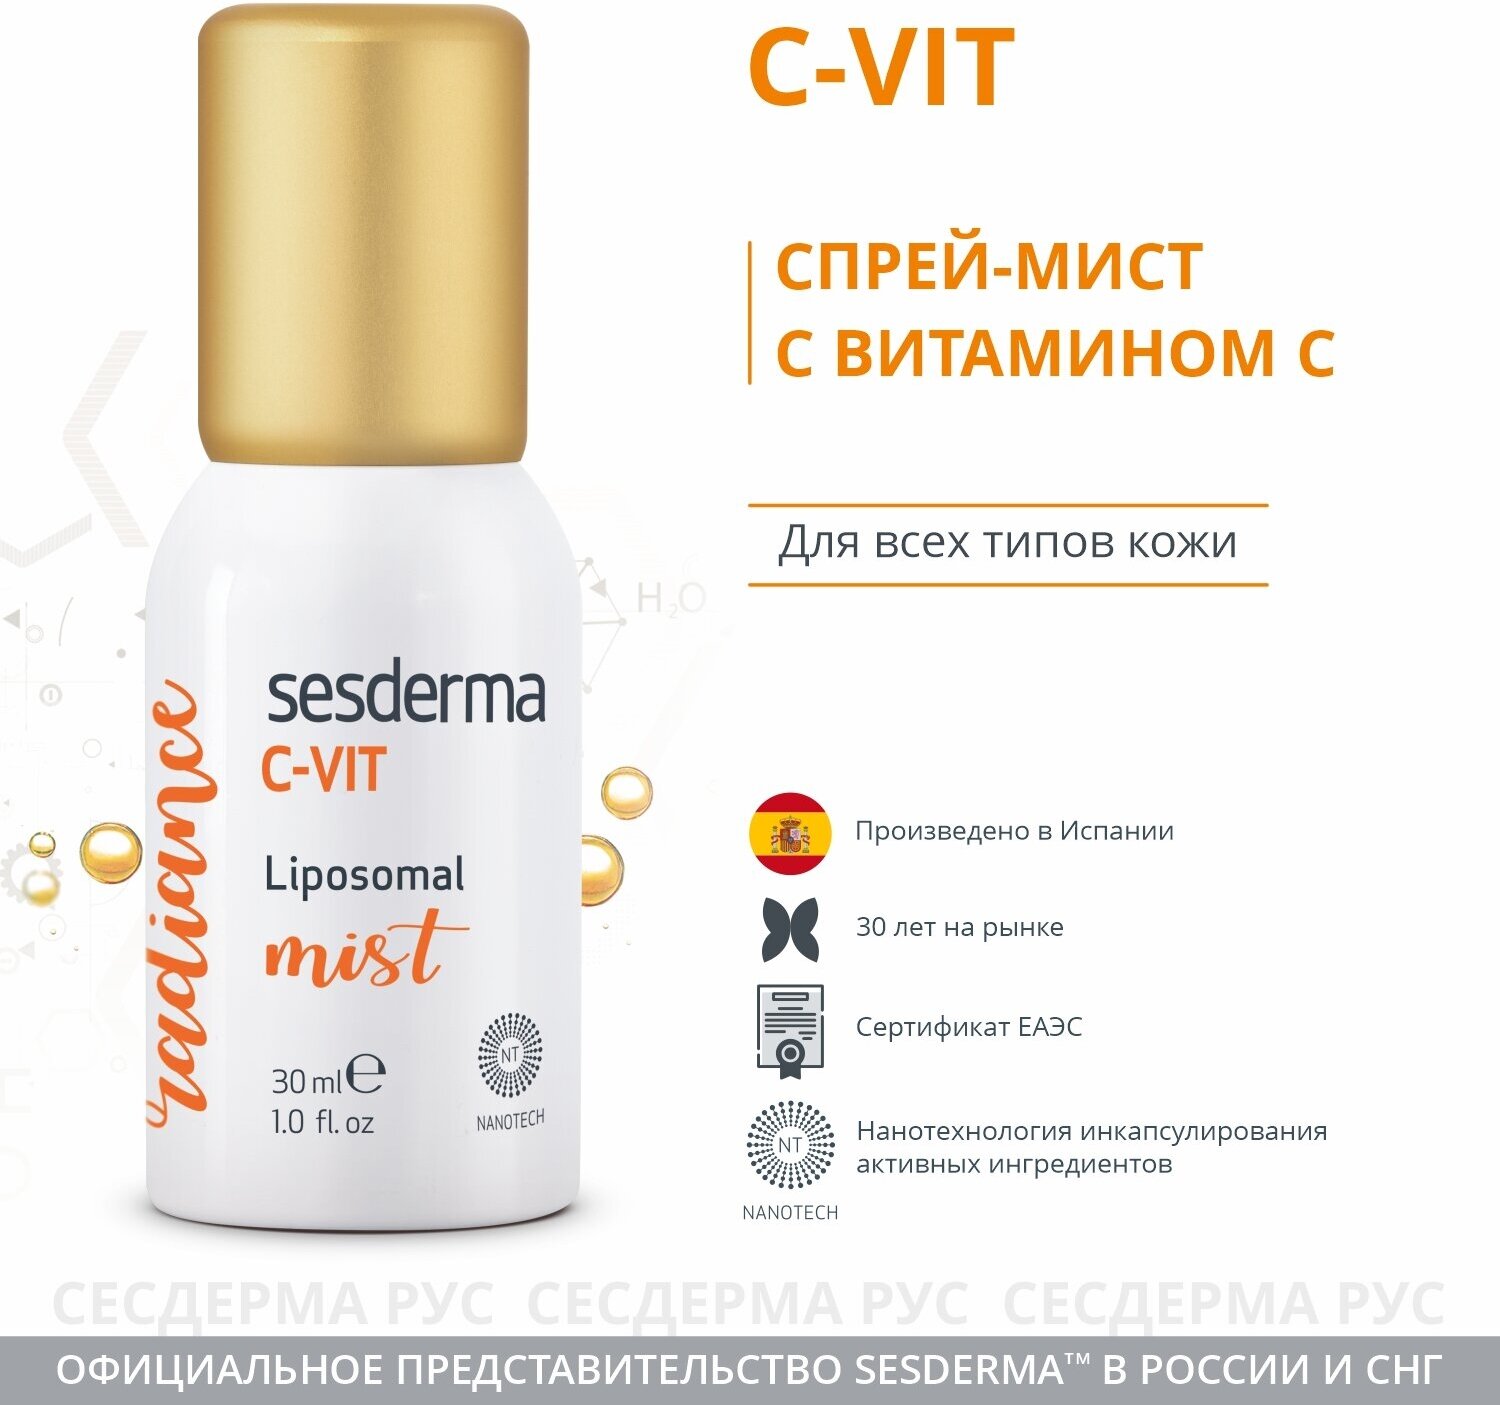 C-VIT Liposomal mist - Спрей-мист для лица с витамином С, 30 мл